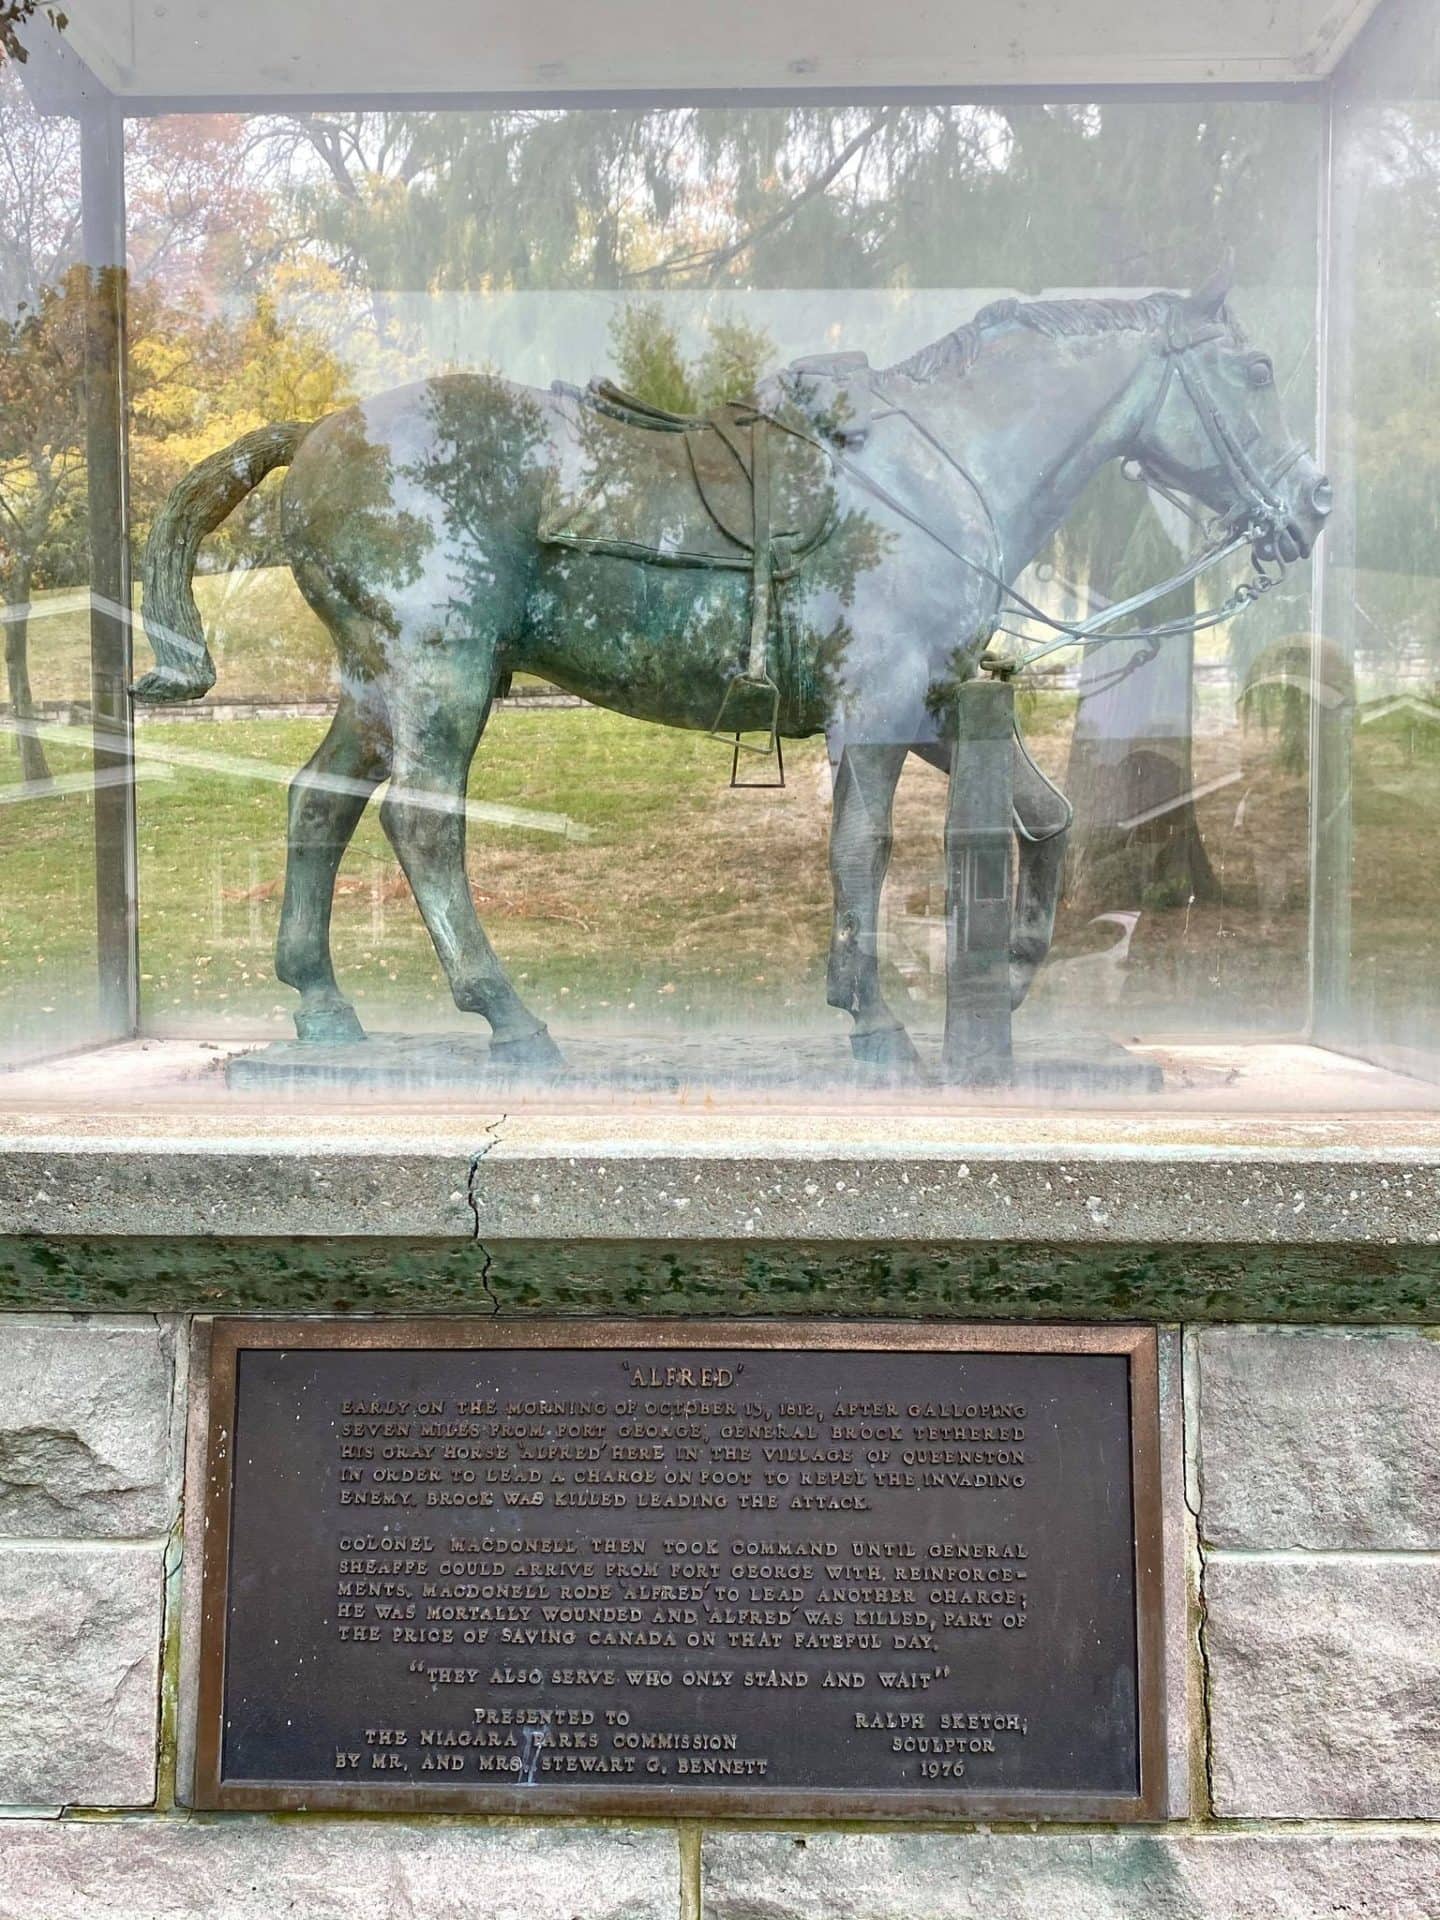 Alfred the horse memorial